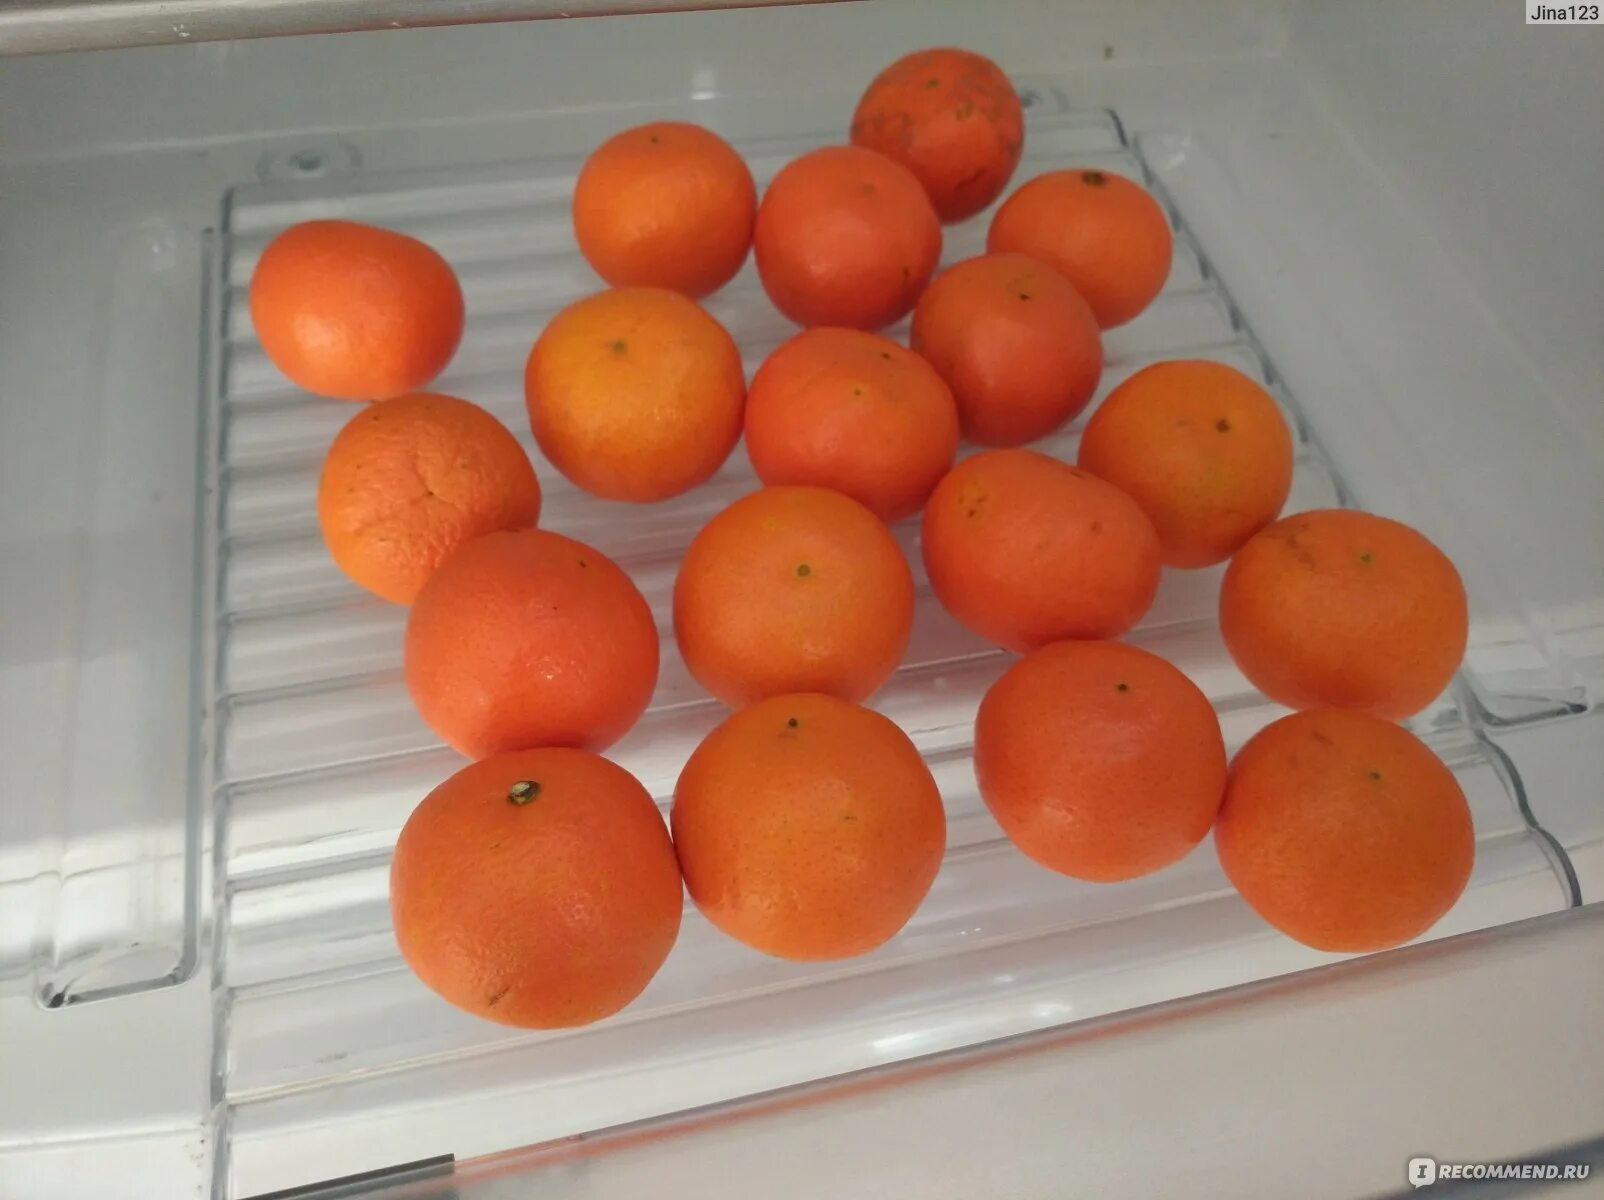 10 Кг мандаринов. Мандариновая диета. Mandarin_ot_nami Сочи. Как выглядят три кг мандаринов. 8 кг мандаринов